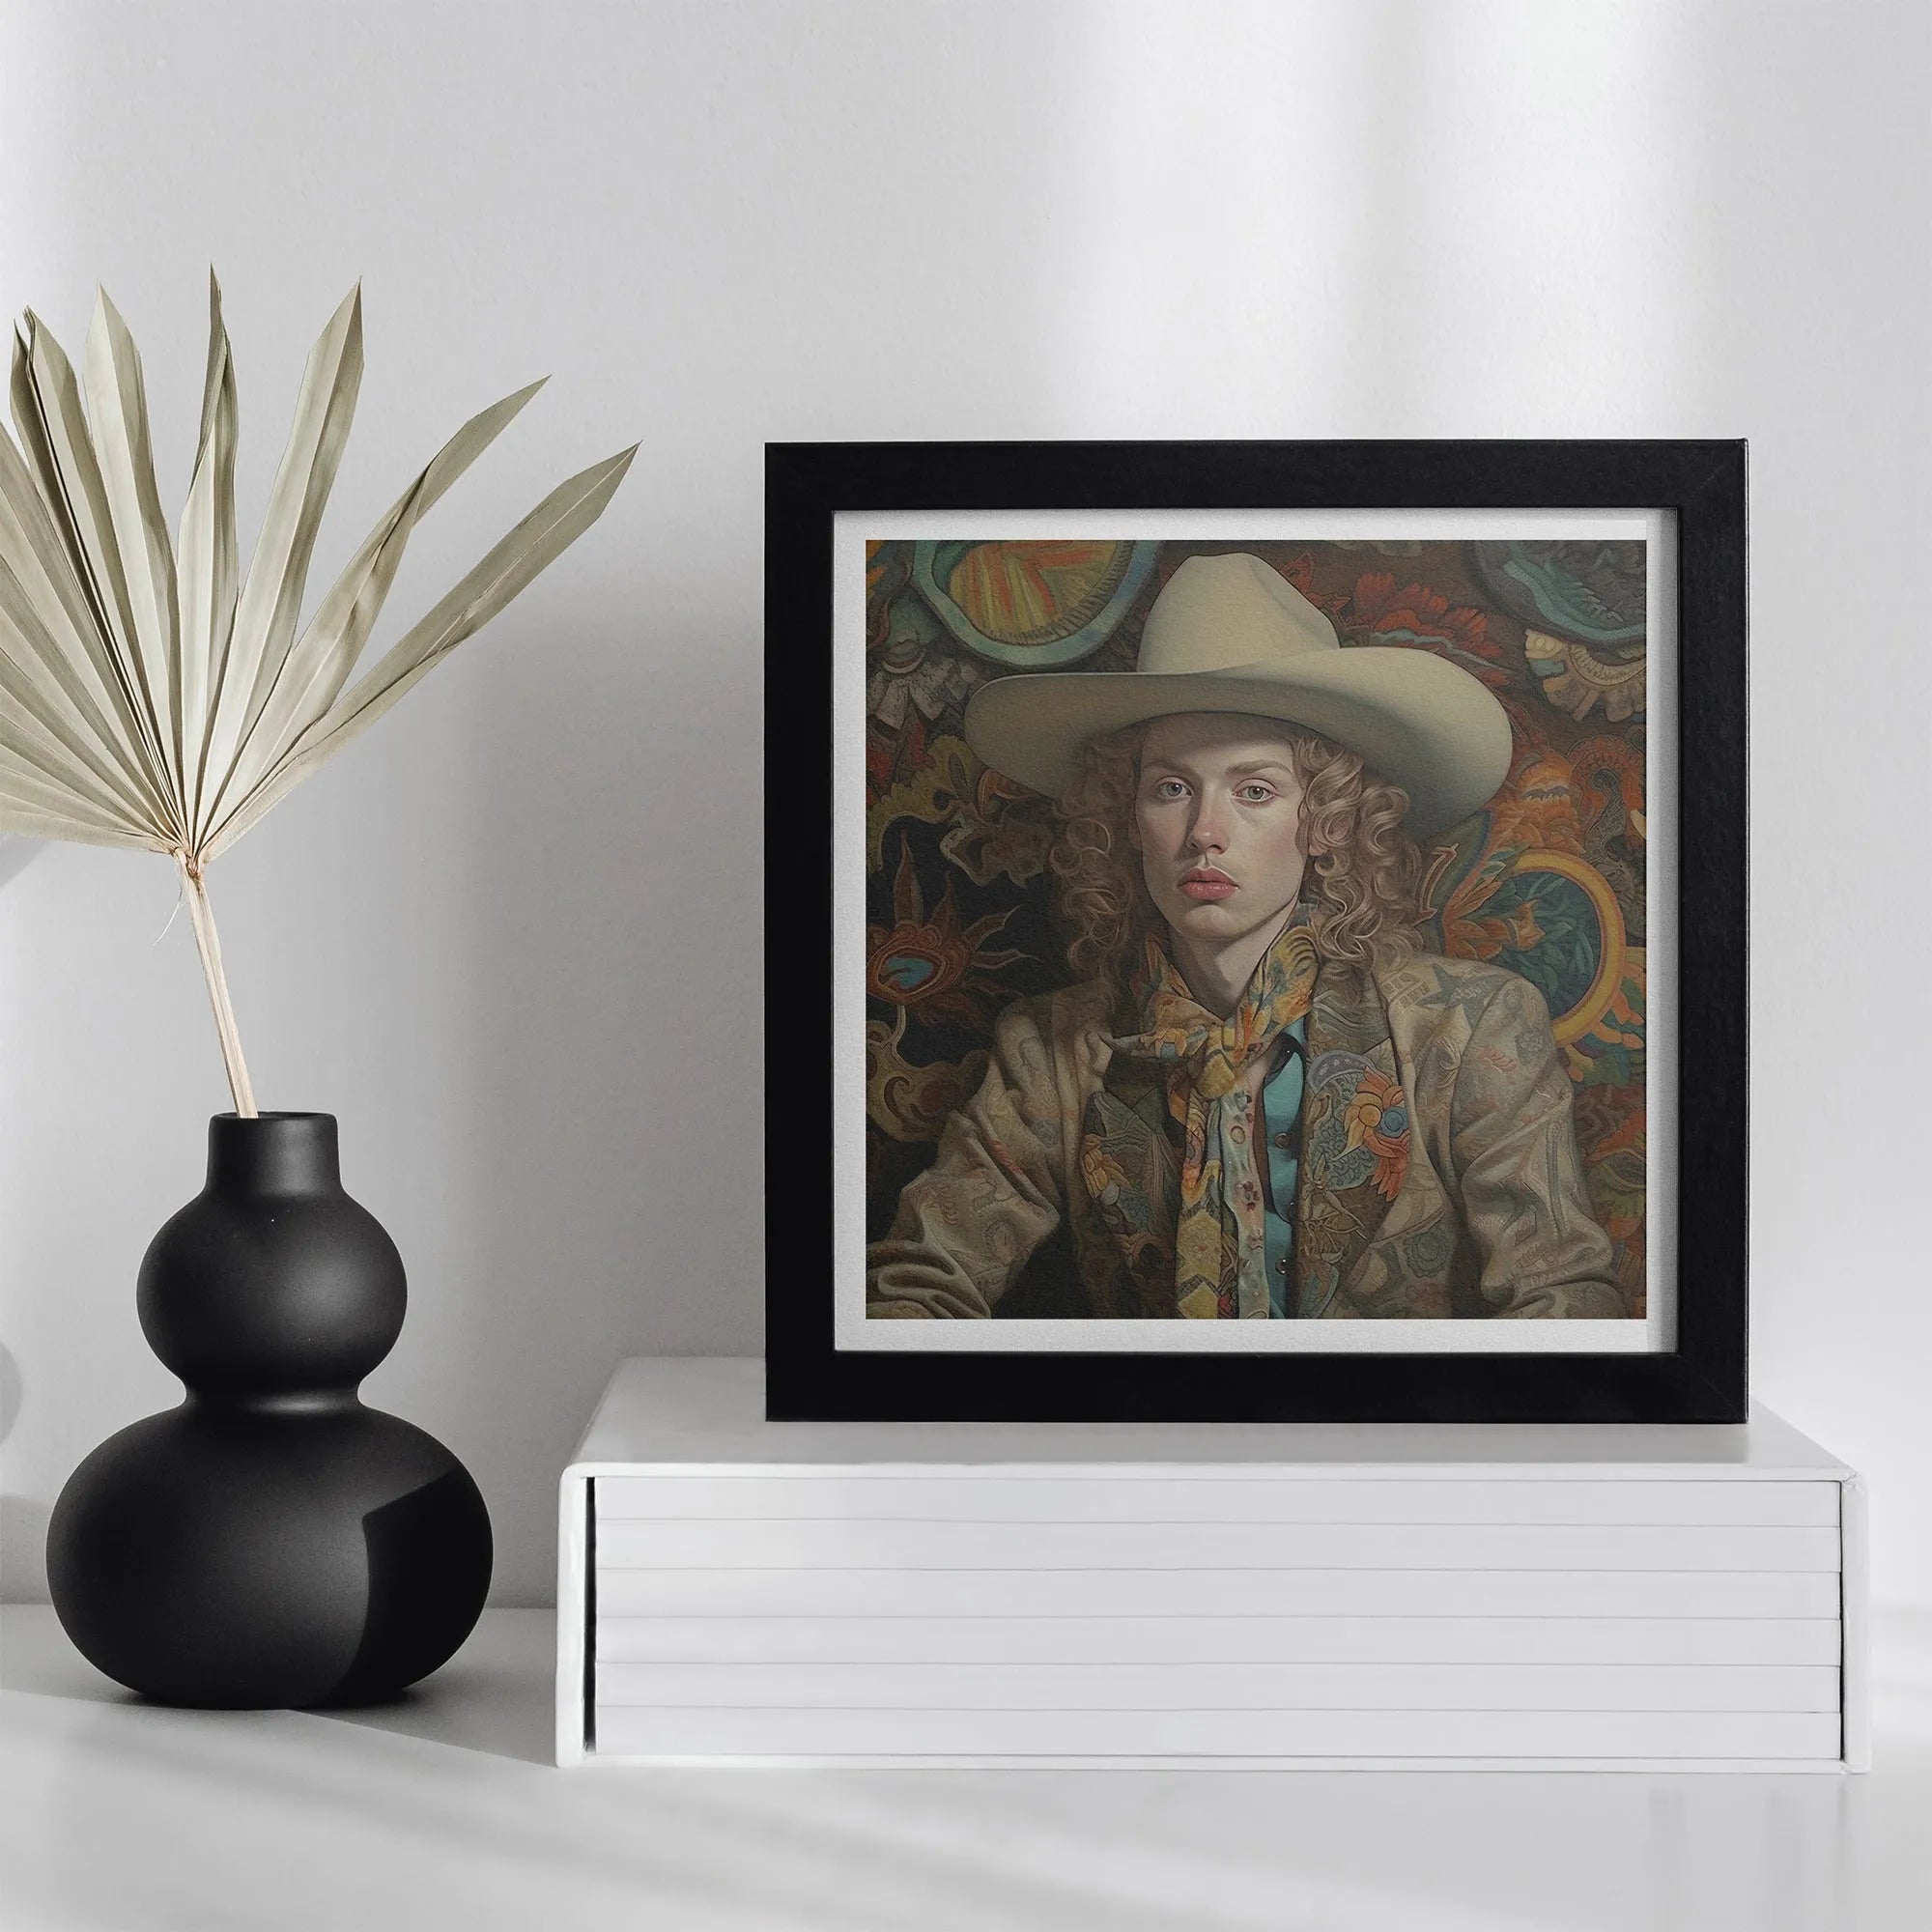 Ollie The Transgender Cowboy - F2m Dandy Transman Art Print - 16’x16’ - Posters Prints & Visual Artwork - Aesthetic Art